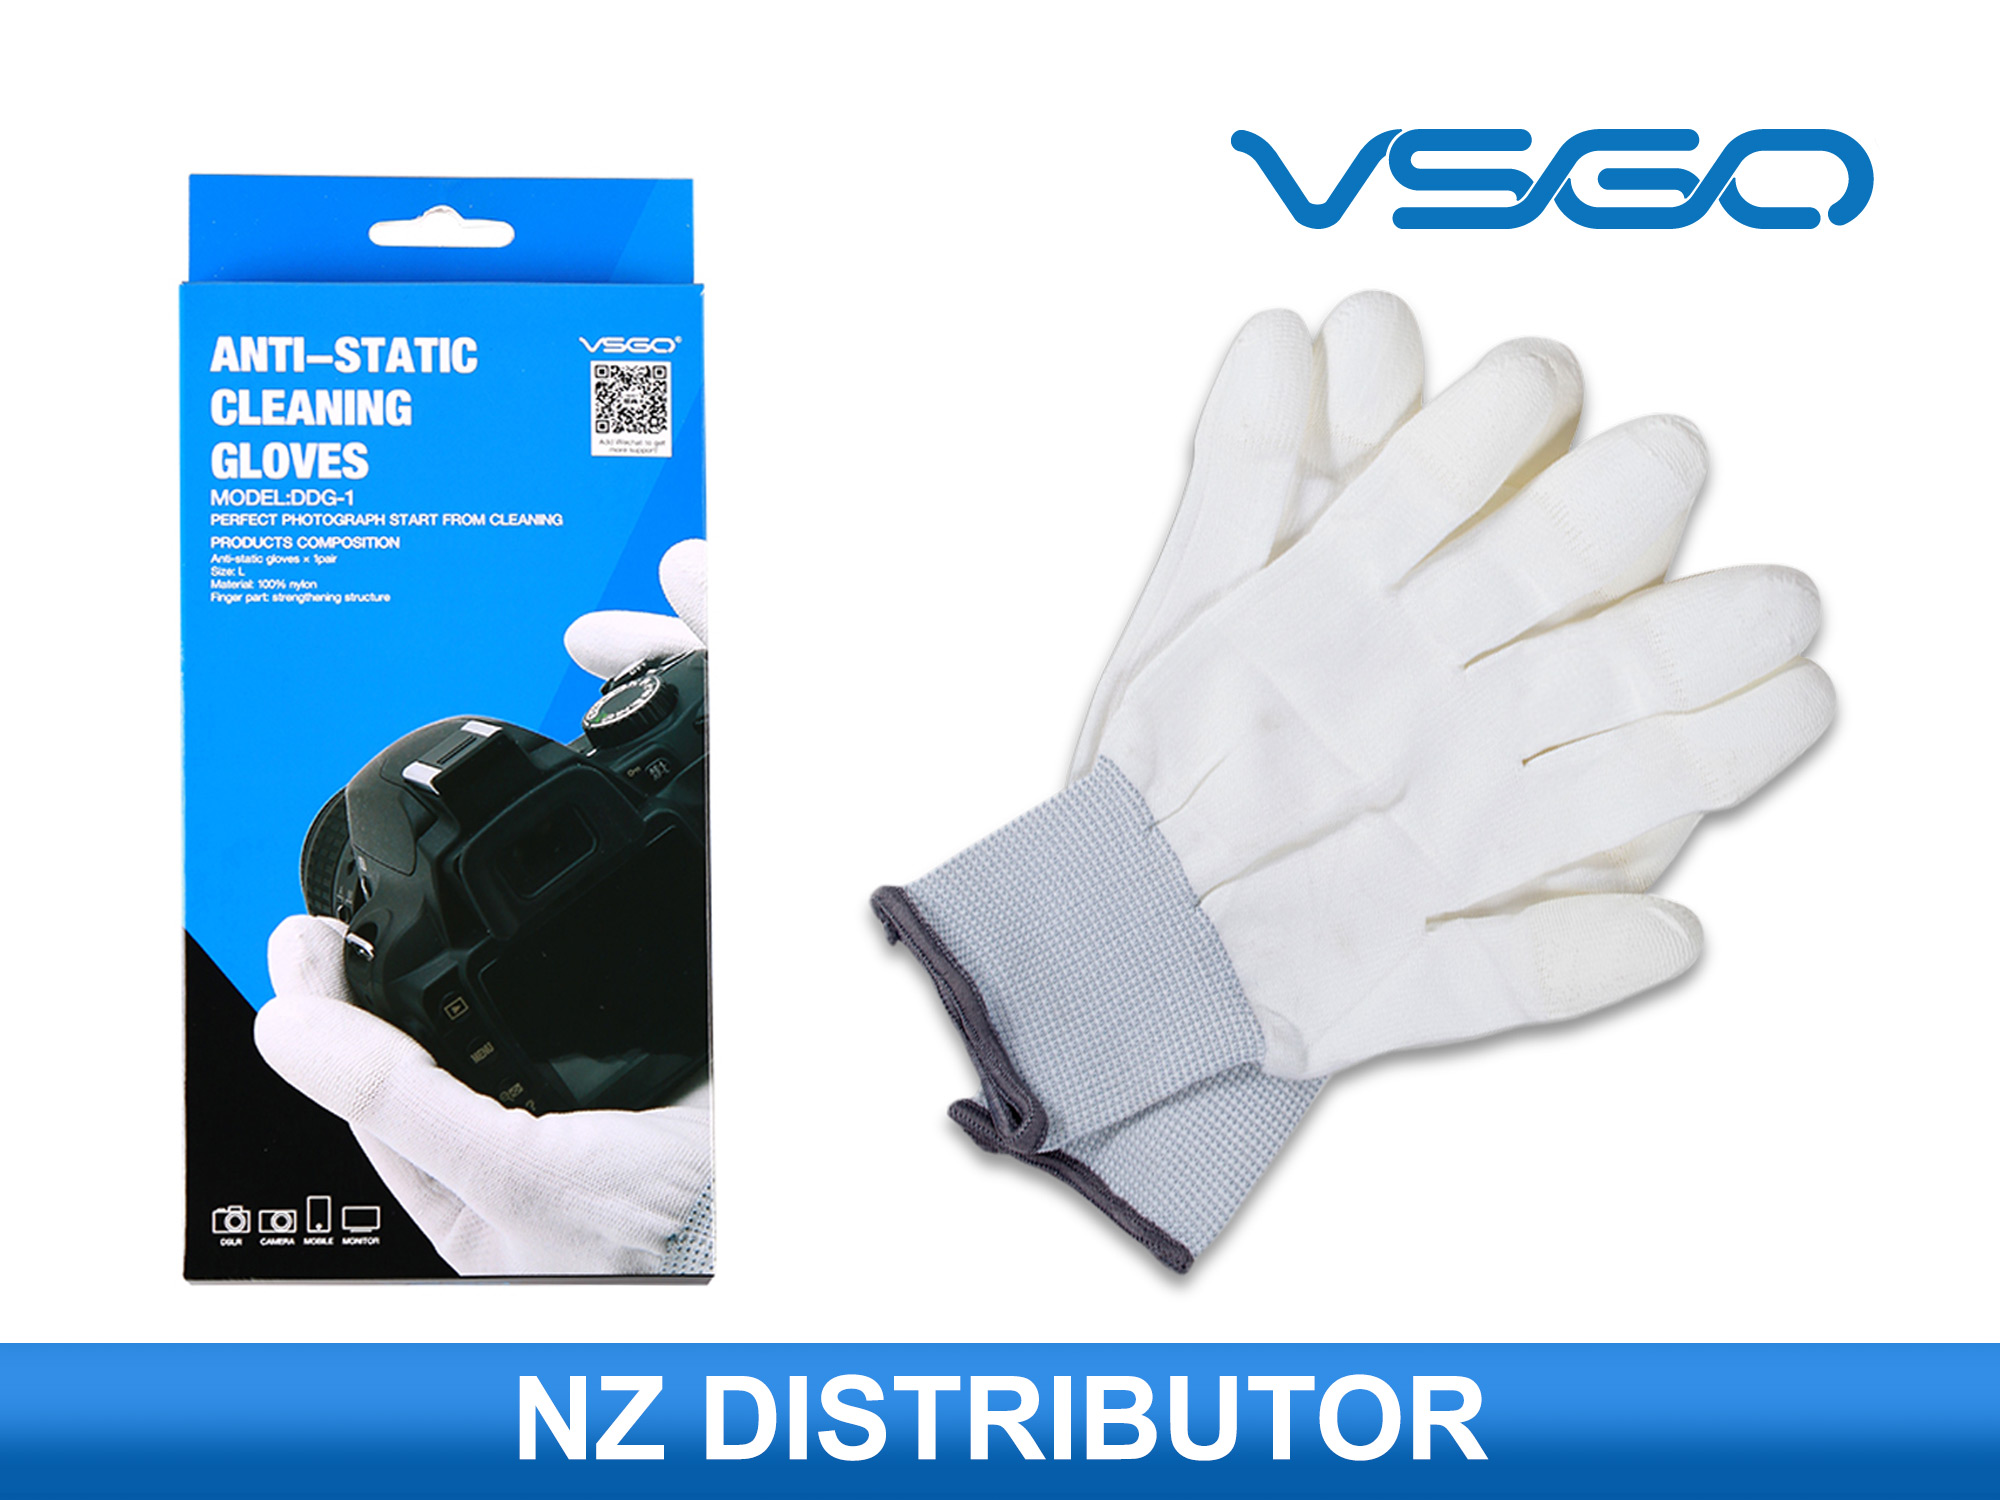 Anti-Static Cleaning Gloves - white - VSGO